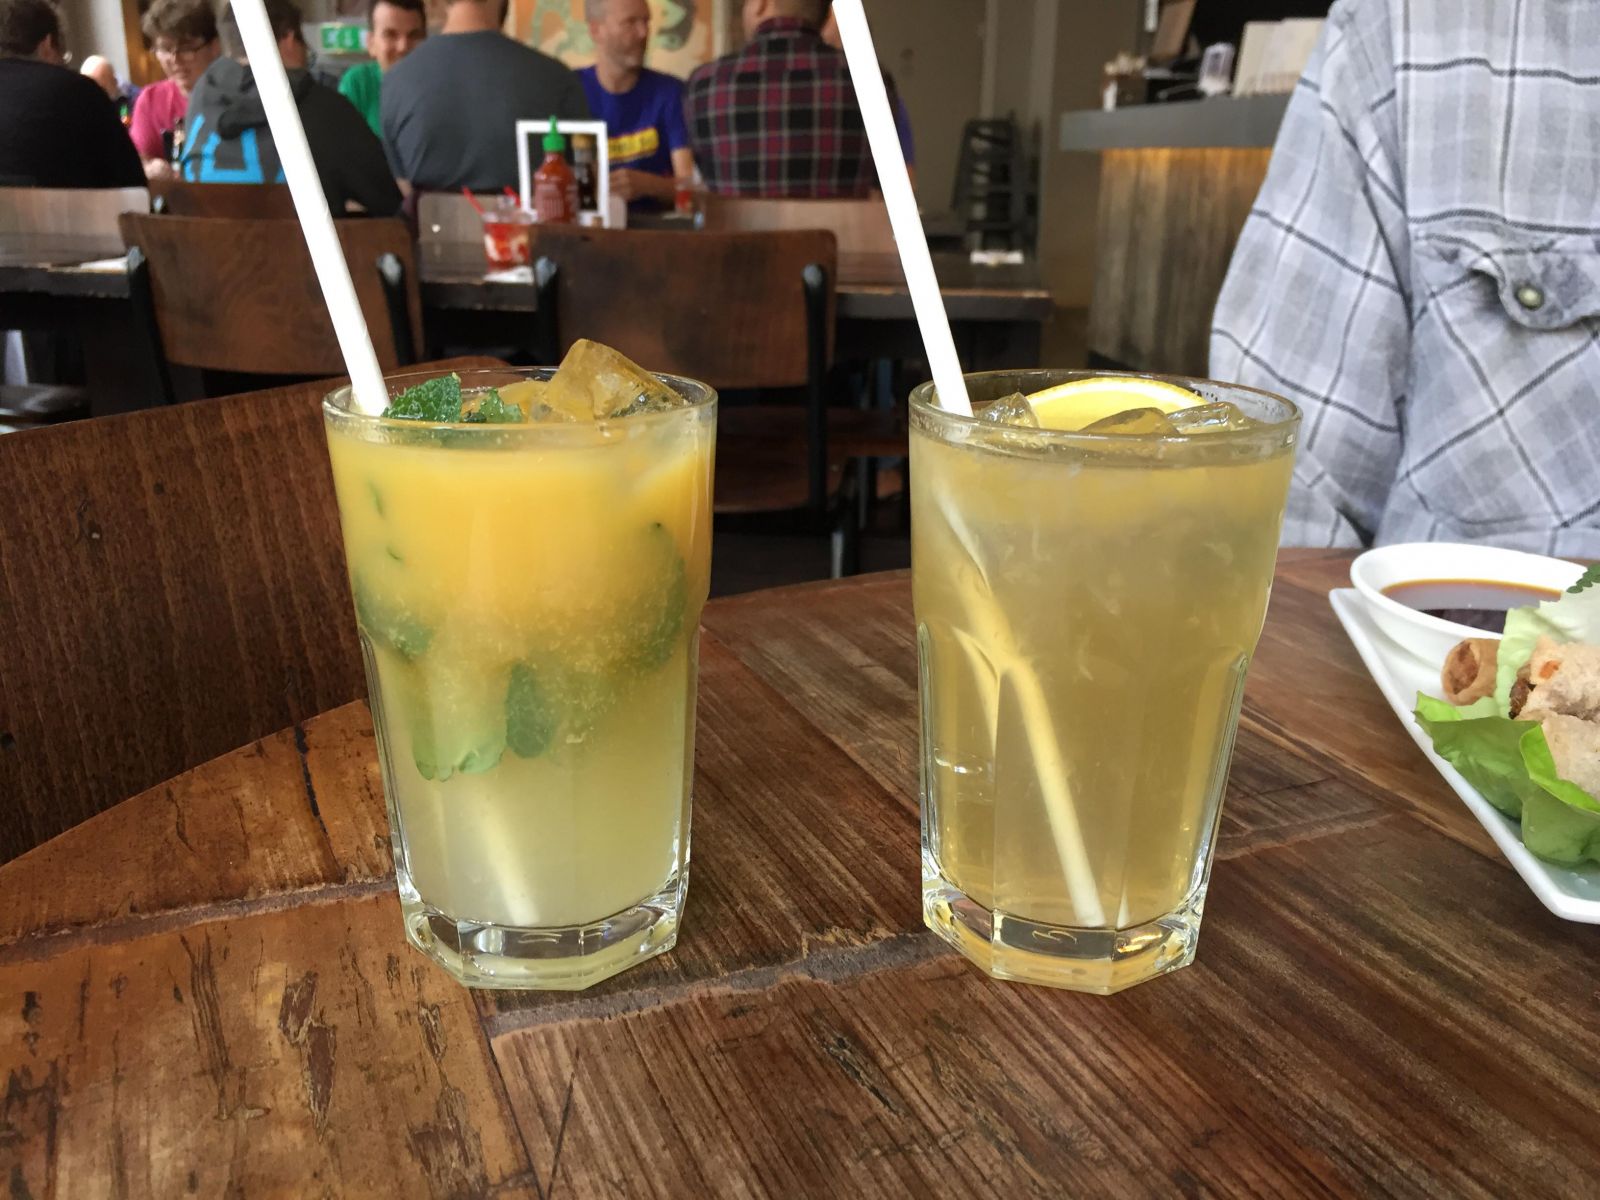 Spicy Lemonade and Green Tea Lemonade at Pho Bristol